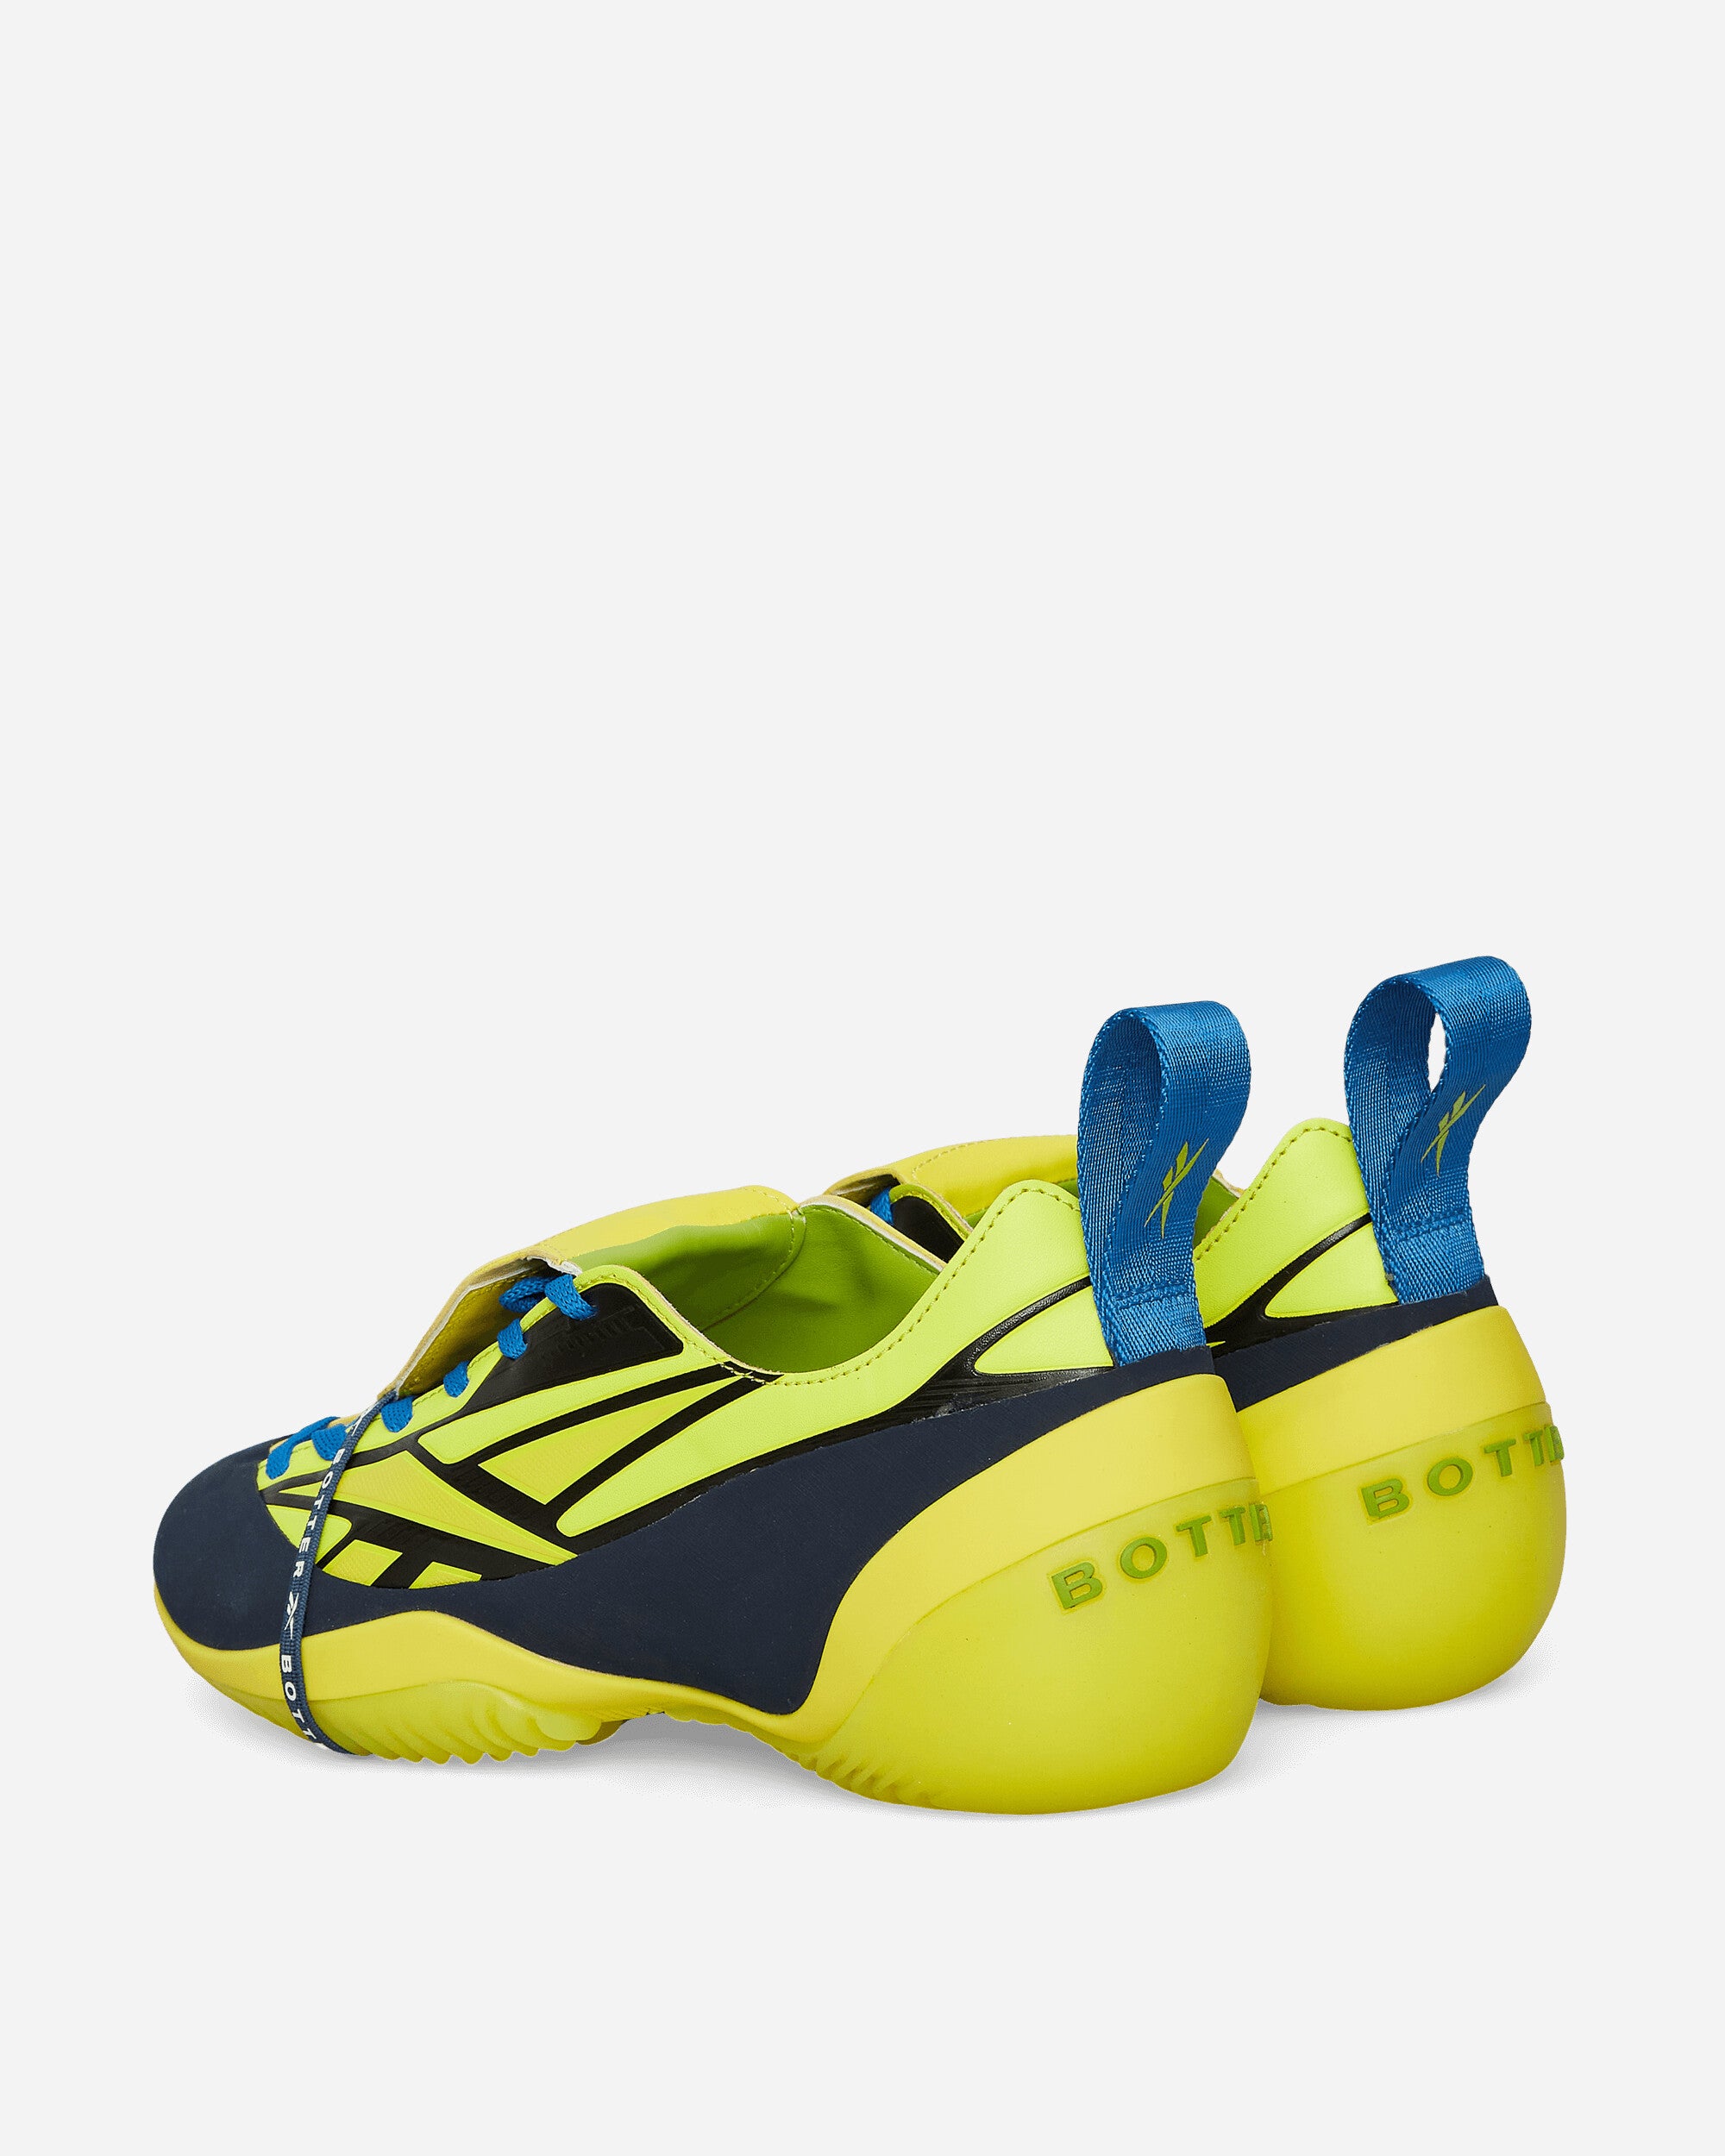 Reebok Reebok X Botter Energia Bo Kets Yellow/Blue Sneakers Low RMIA04GC99MAT0021800 